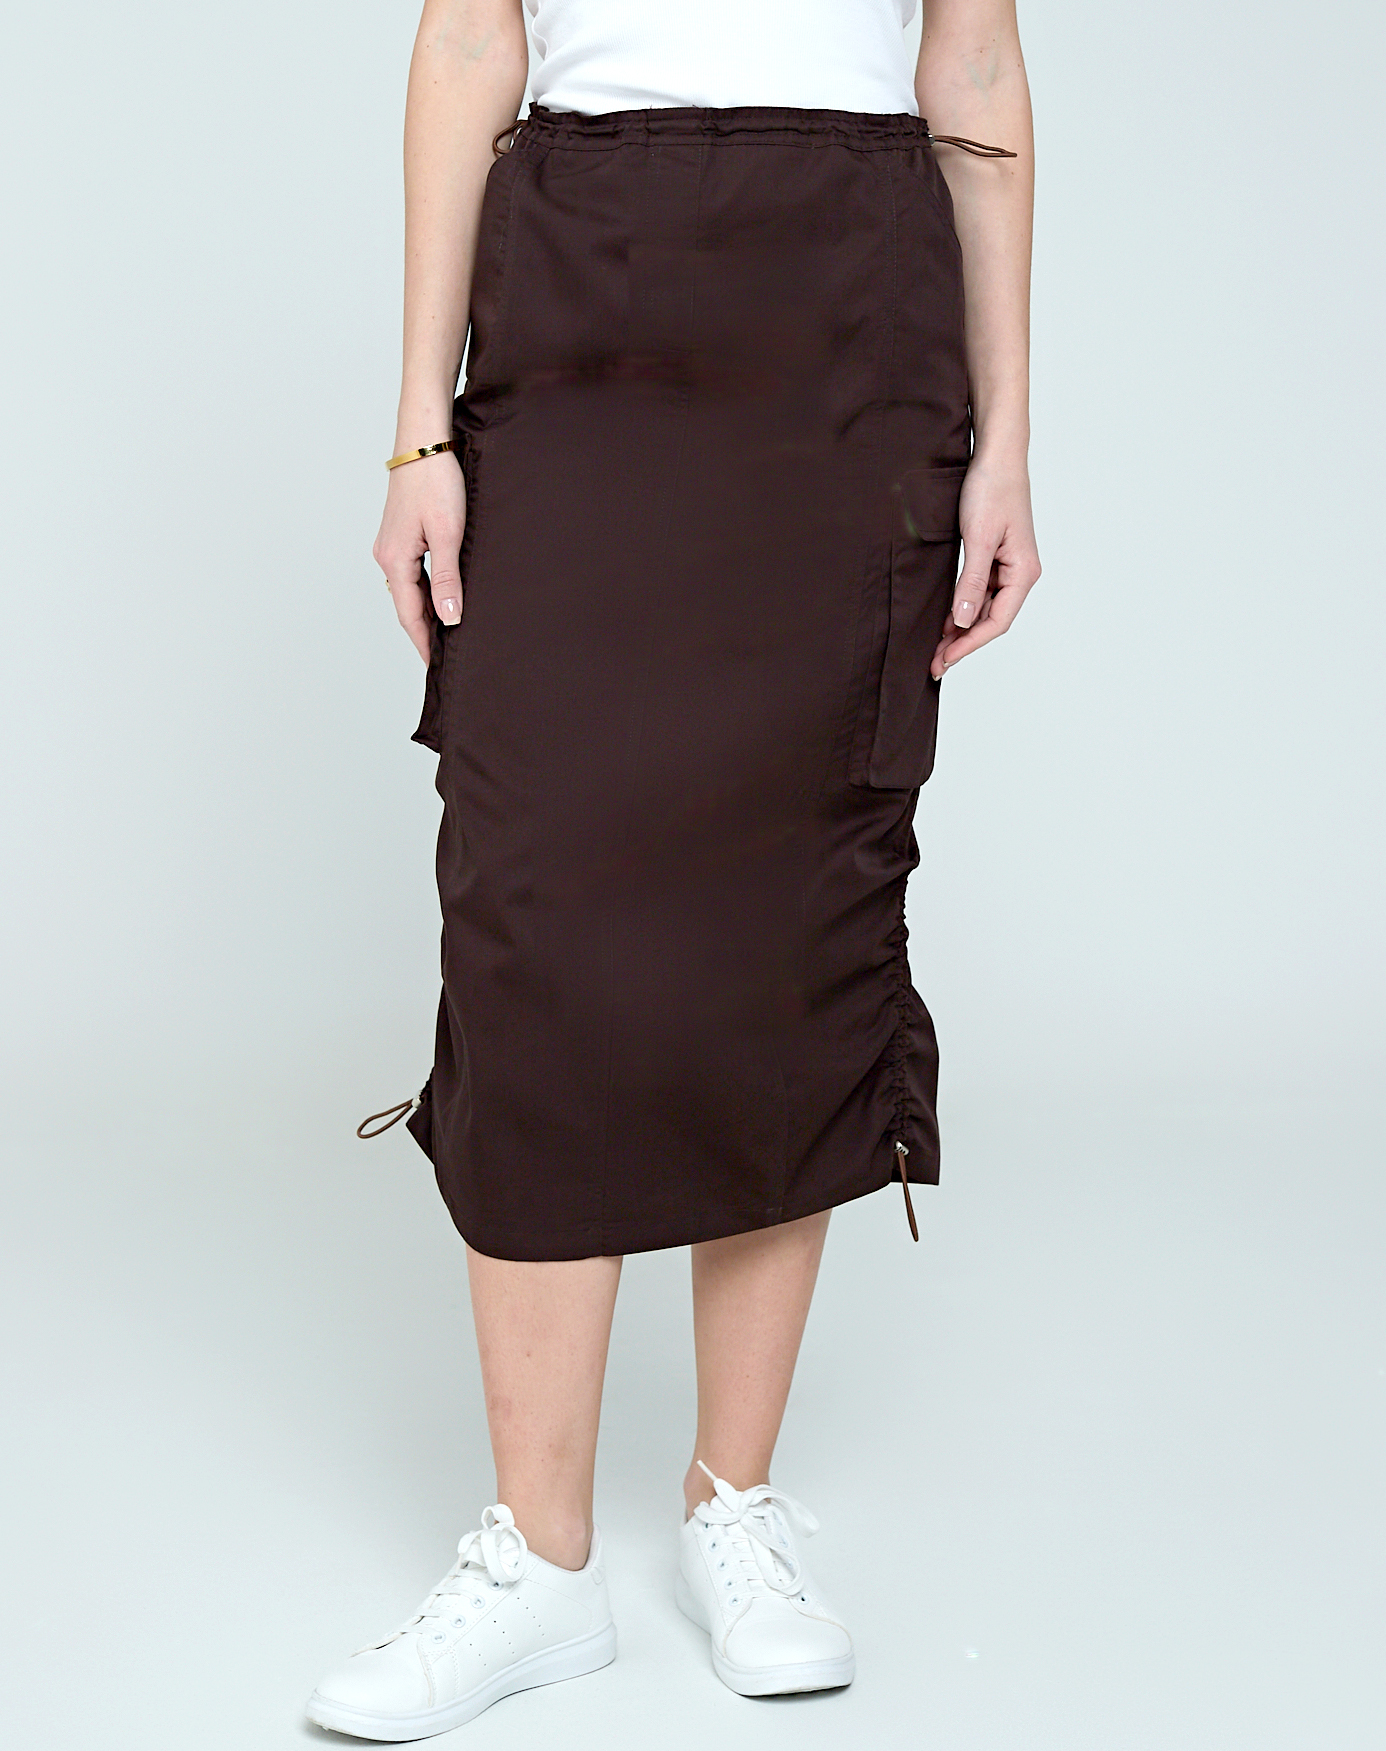 Юбка женская IRINA EGOROVA Cargo Skirt коричневая 50 RU